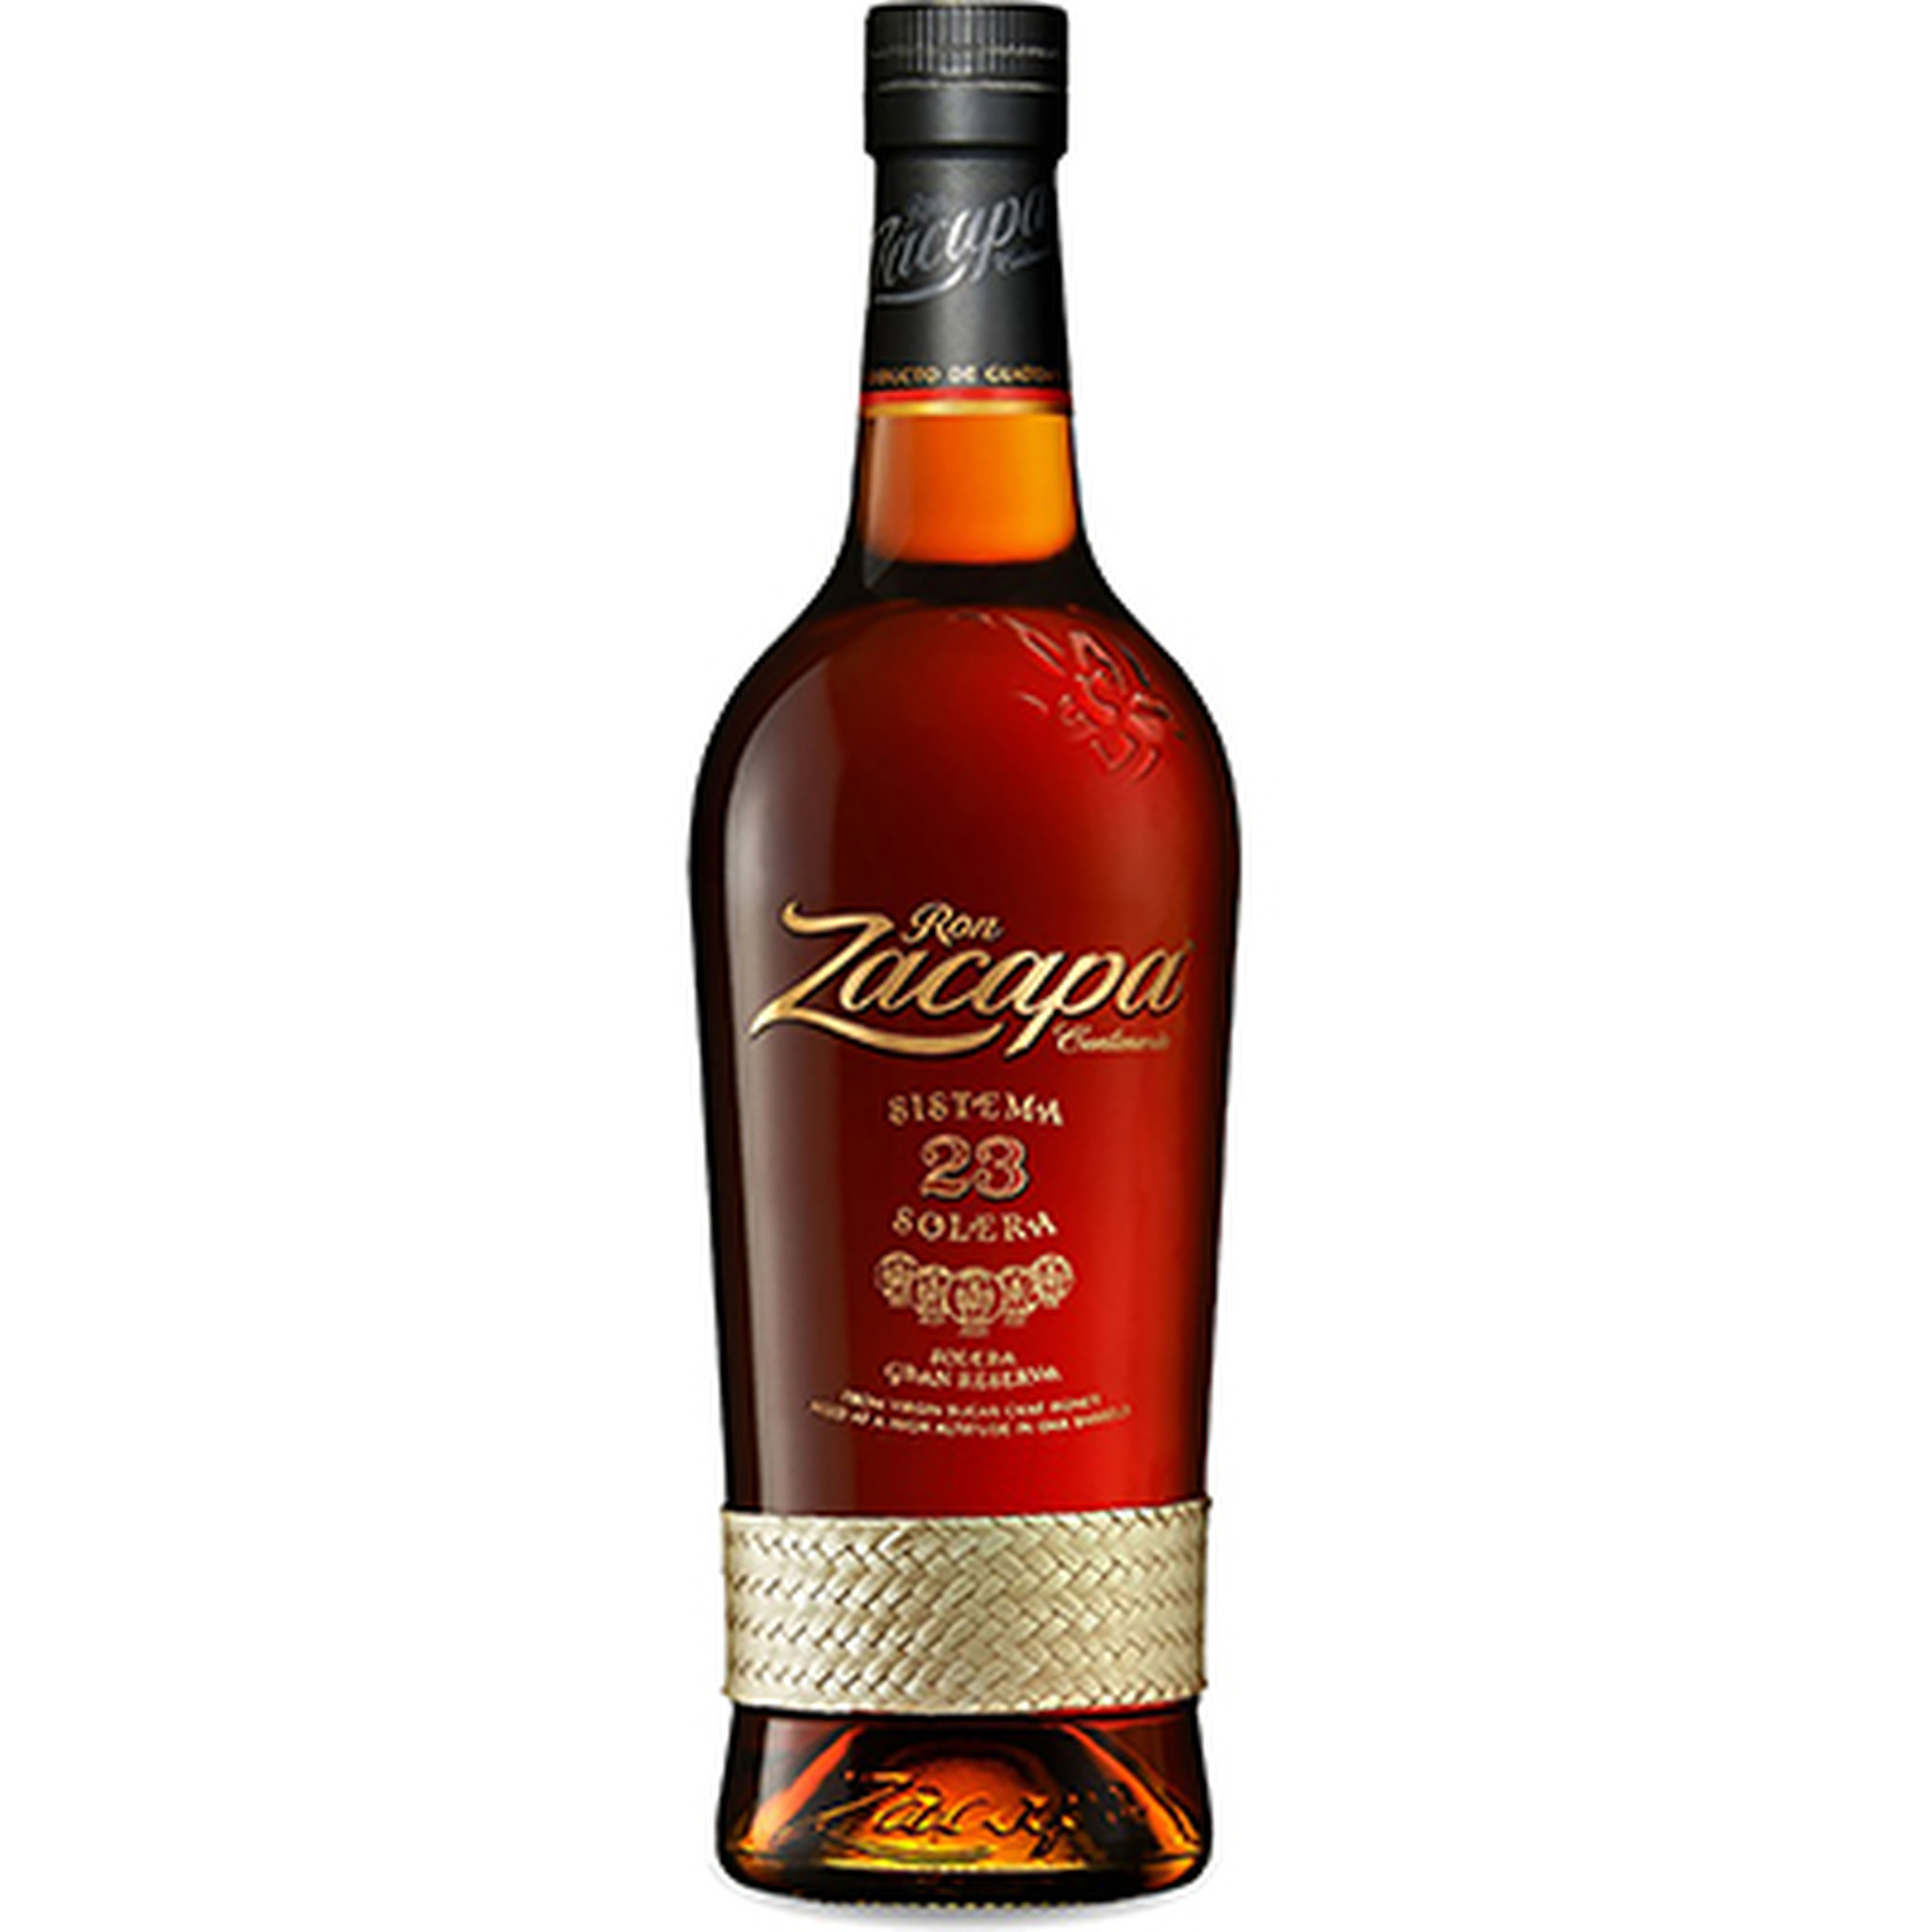 Guatemala Zacapa Rum Centenario Solera Gran Reserva 23 Yr